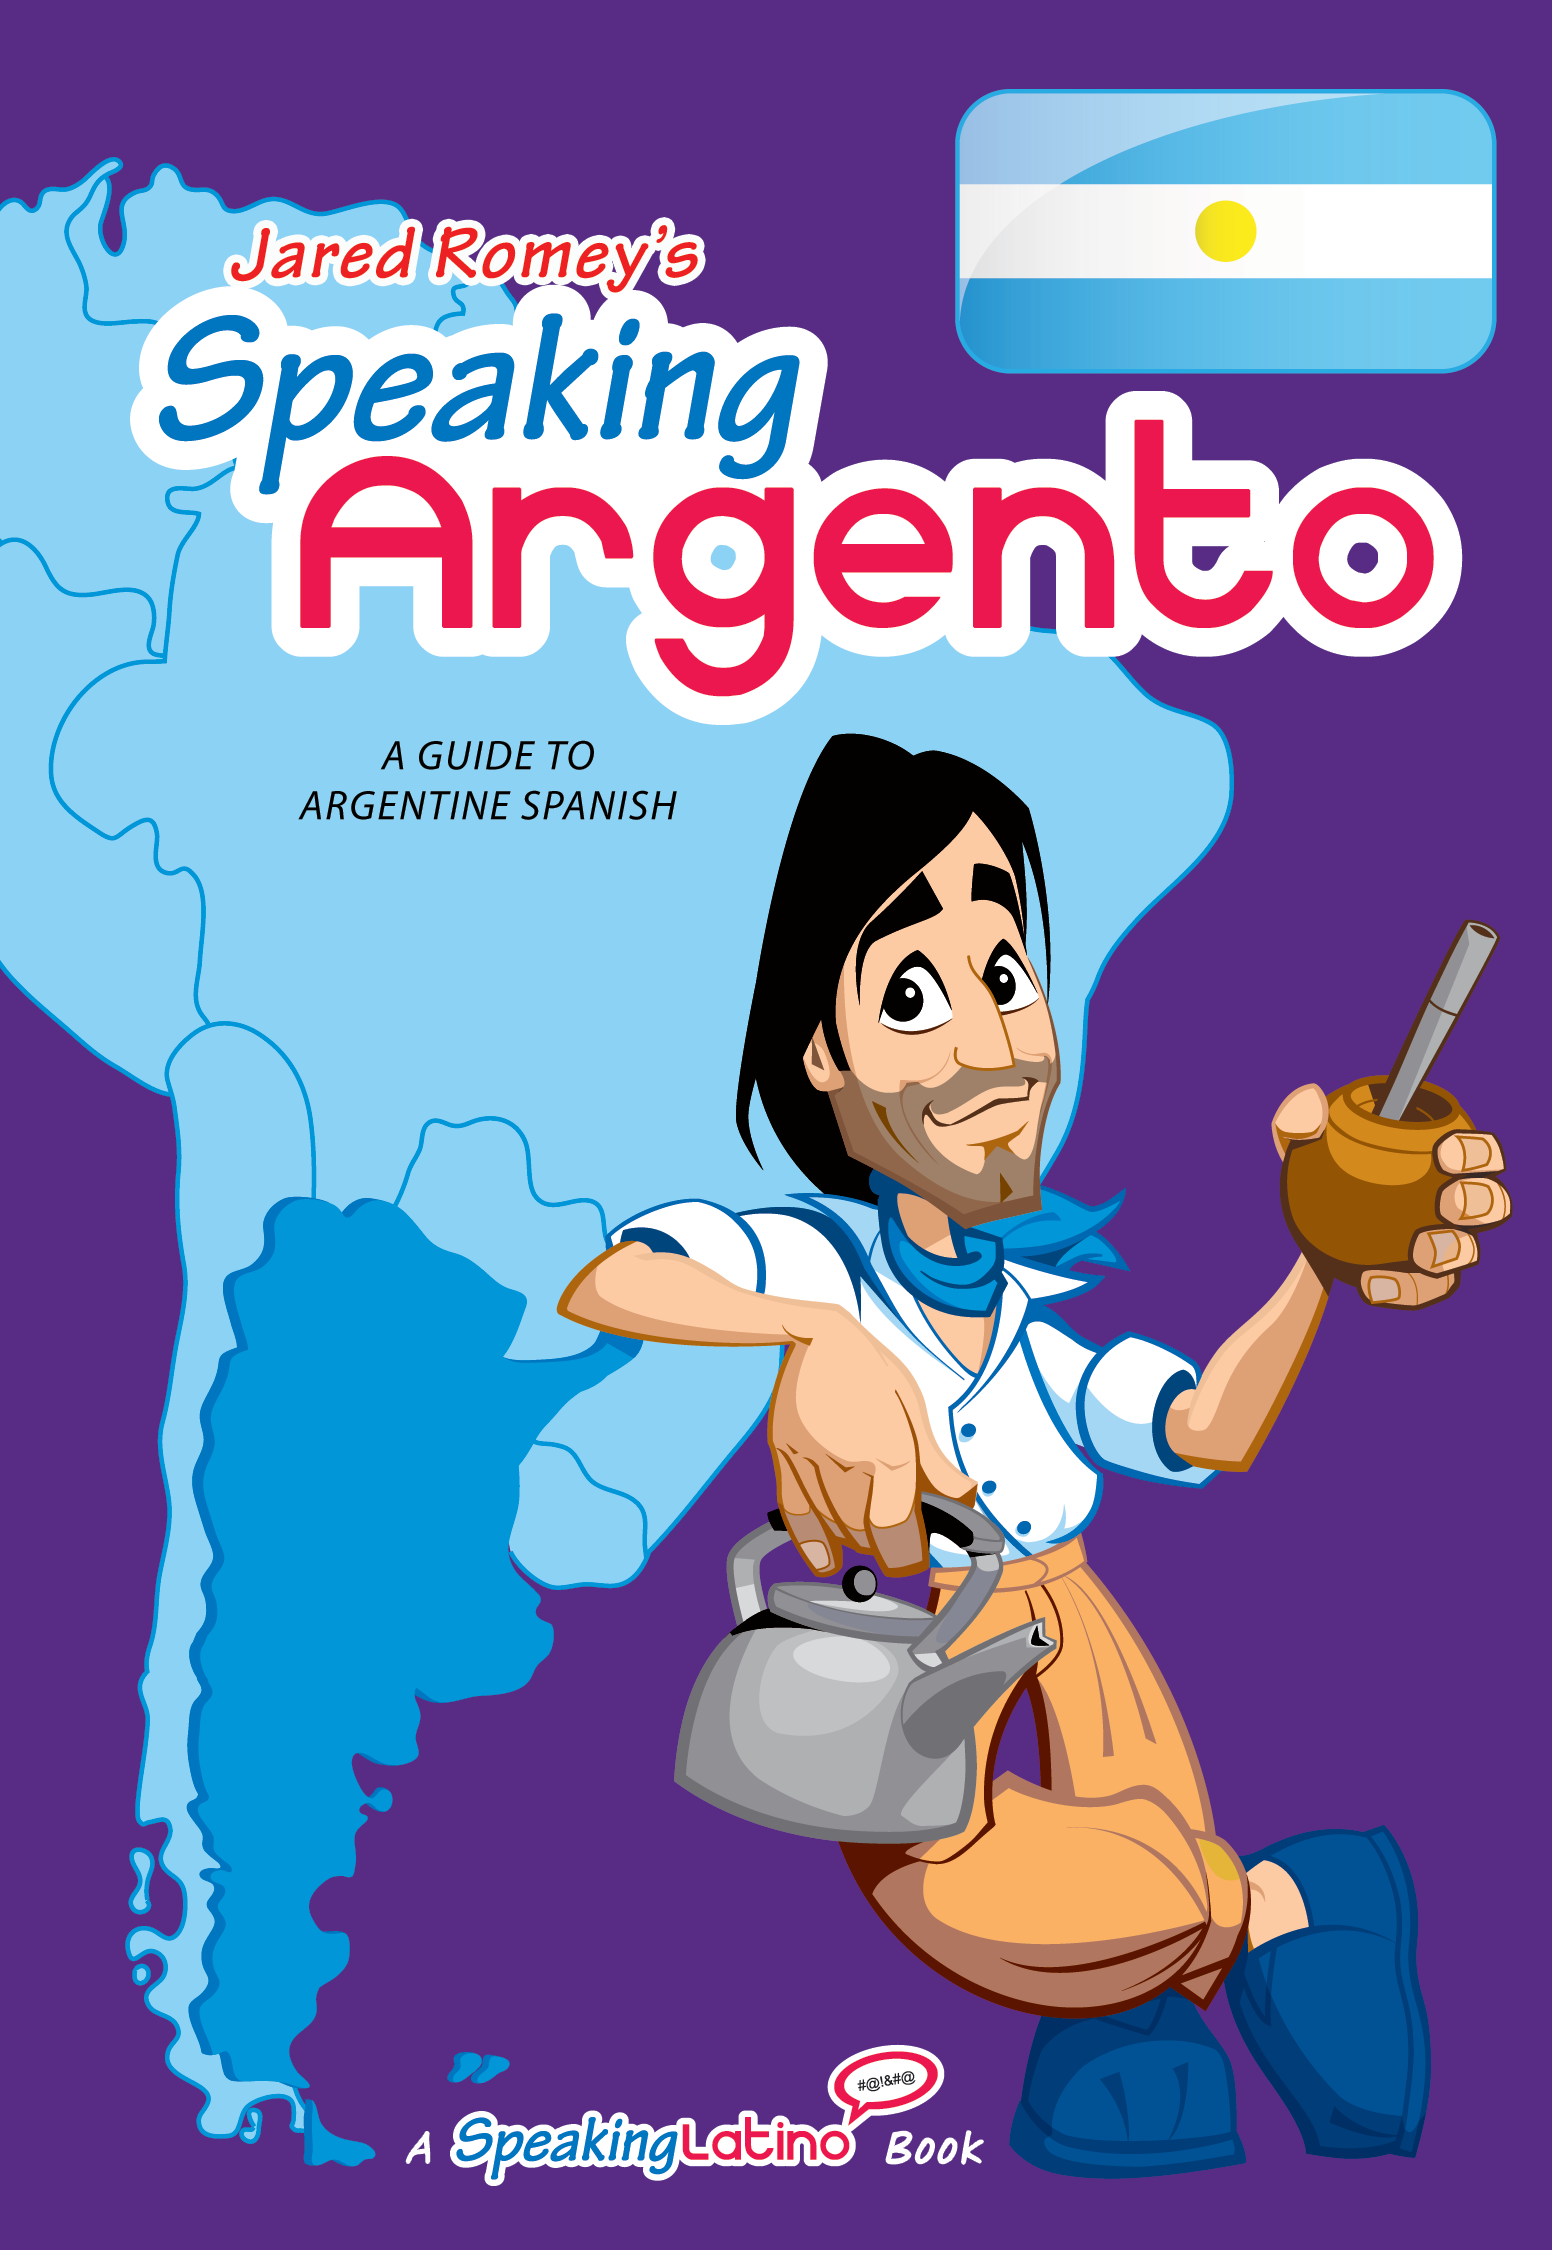 spanish argentina speaking dictionary argentine argento words english comic slang learn speakinglatino speak